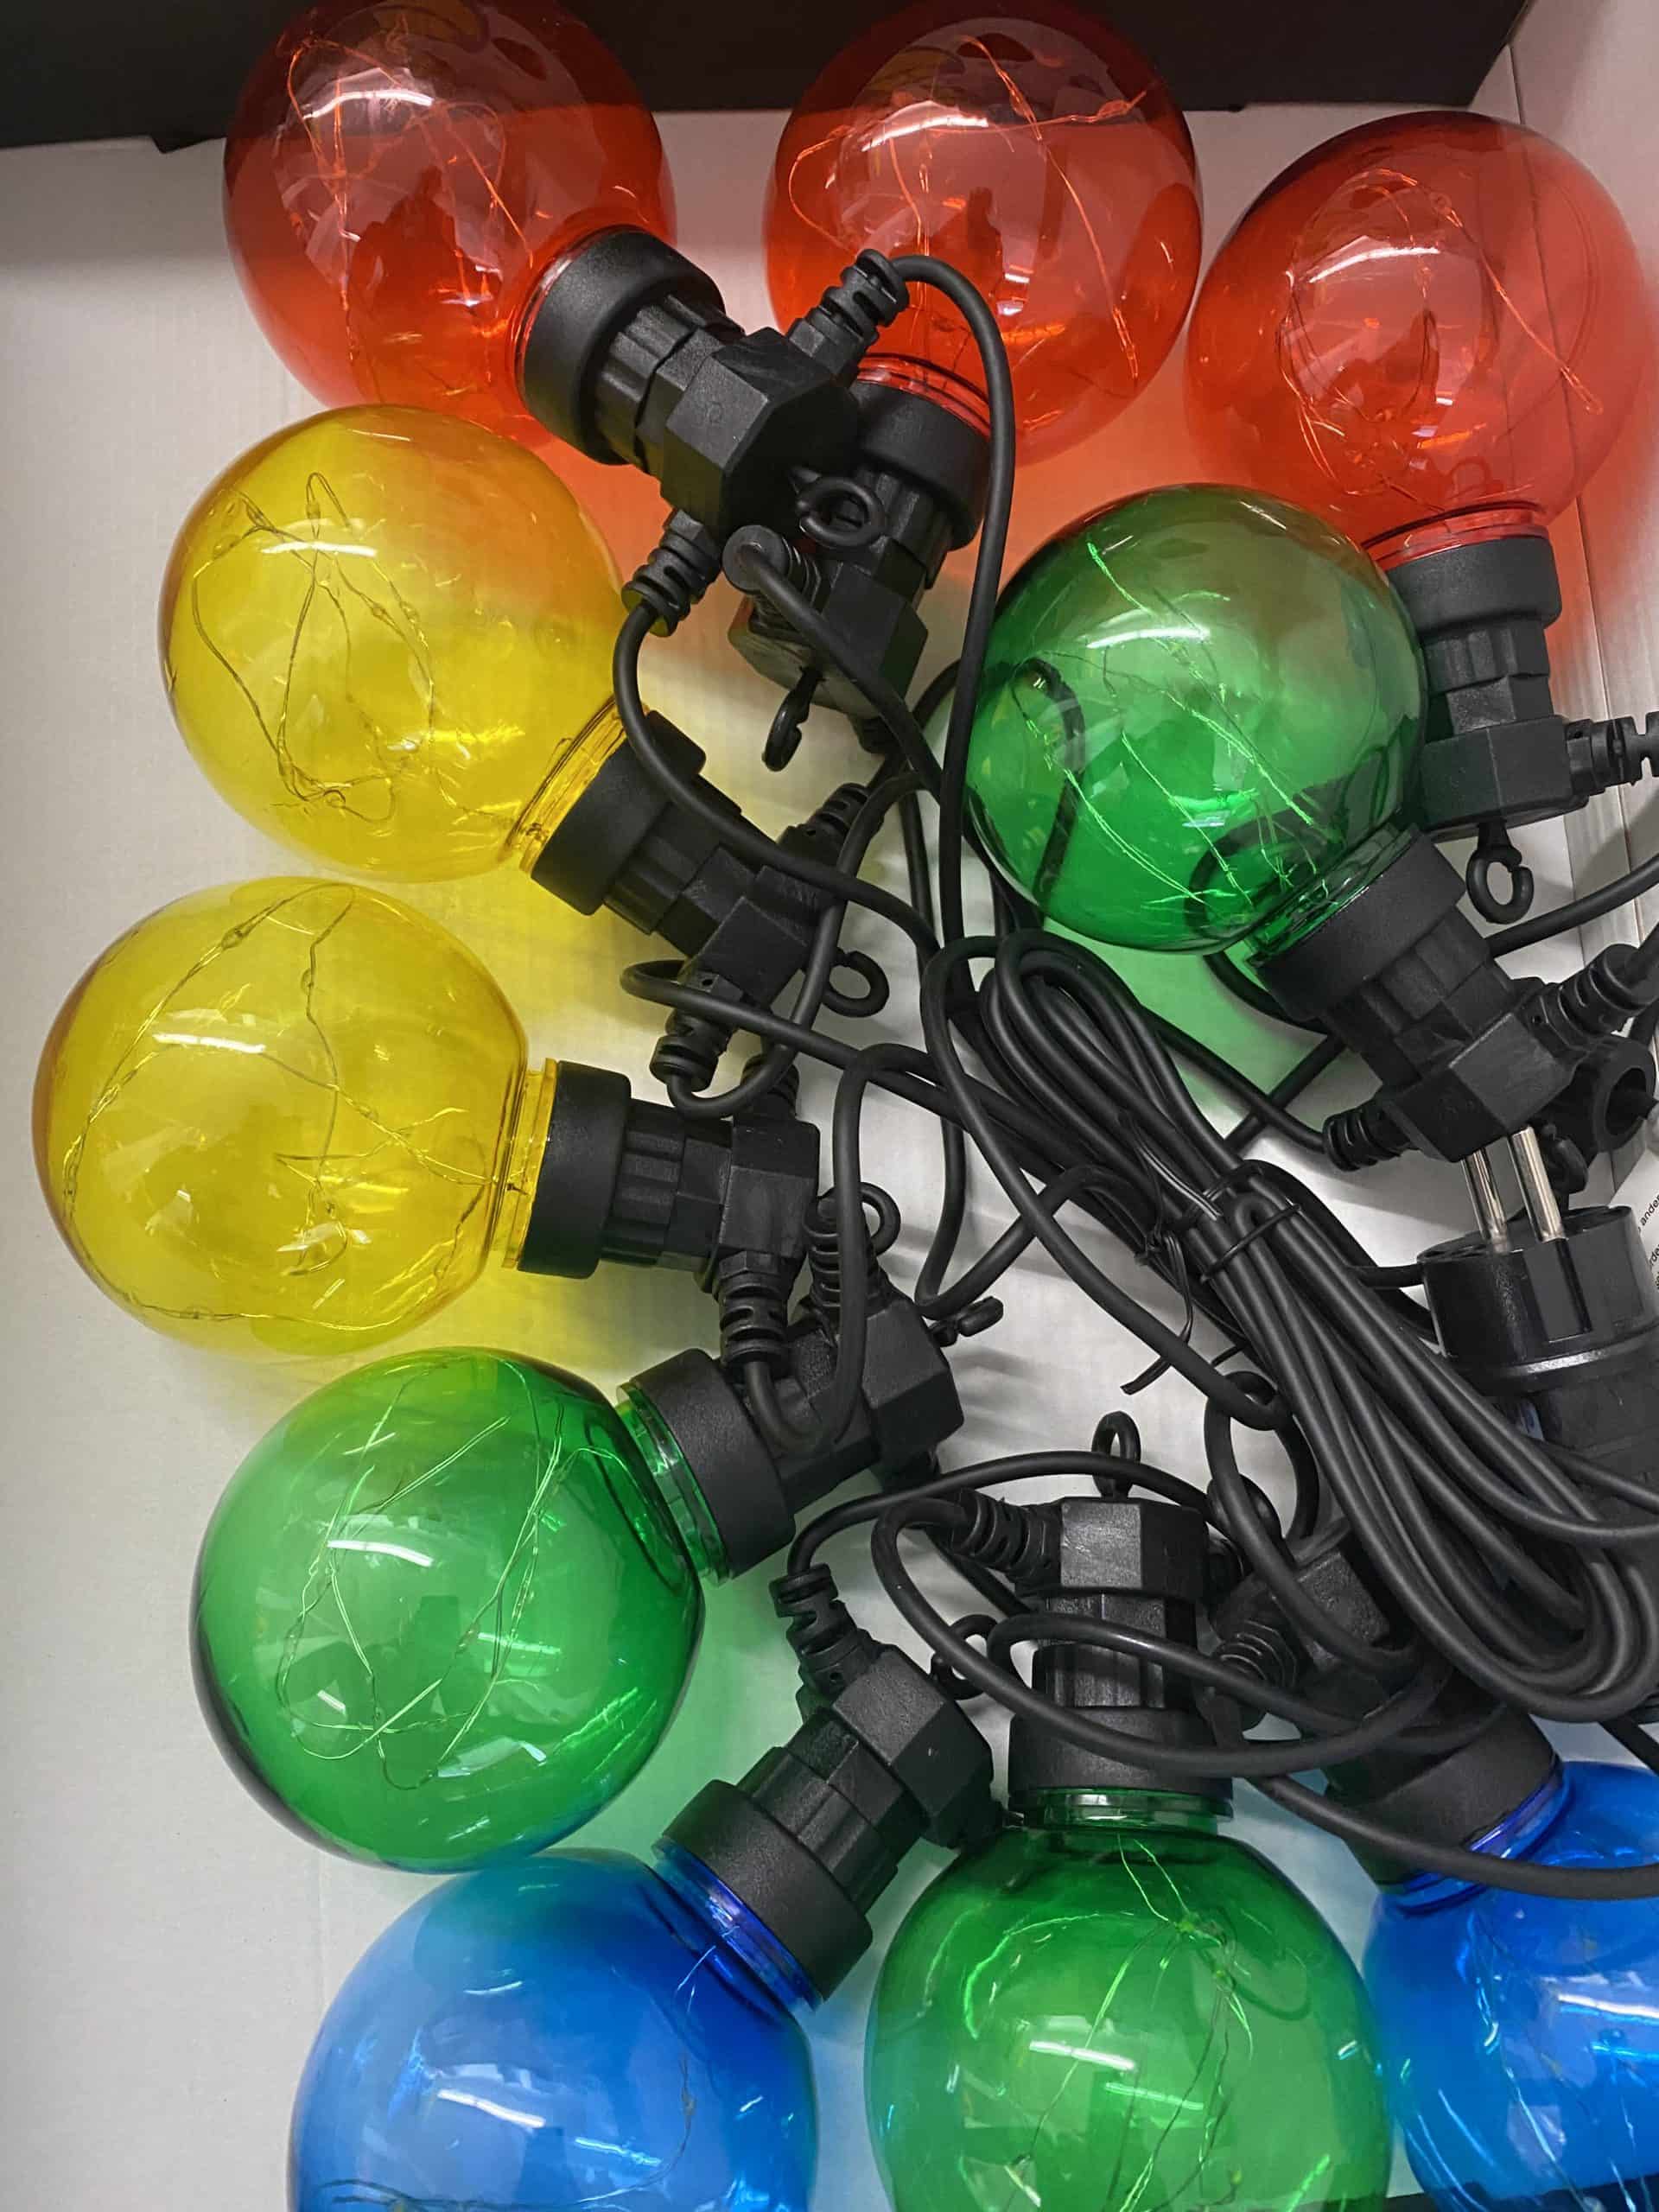 LED-Outdoorlichterkette "Lightbulbs XL"